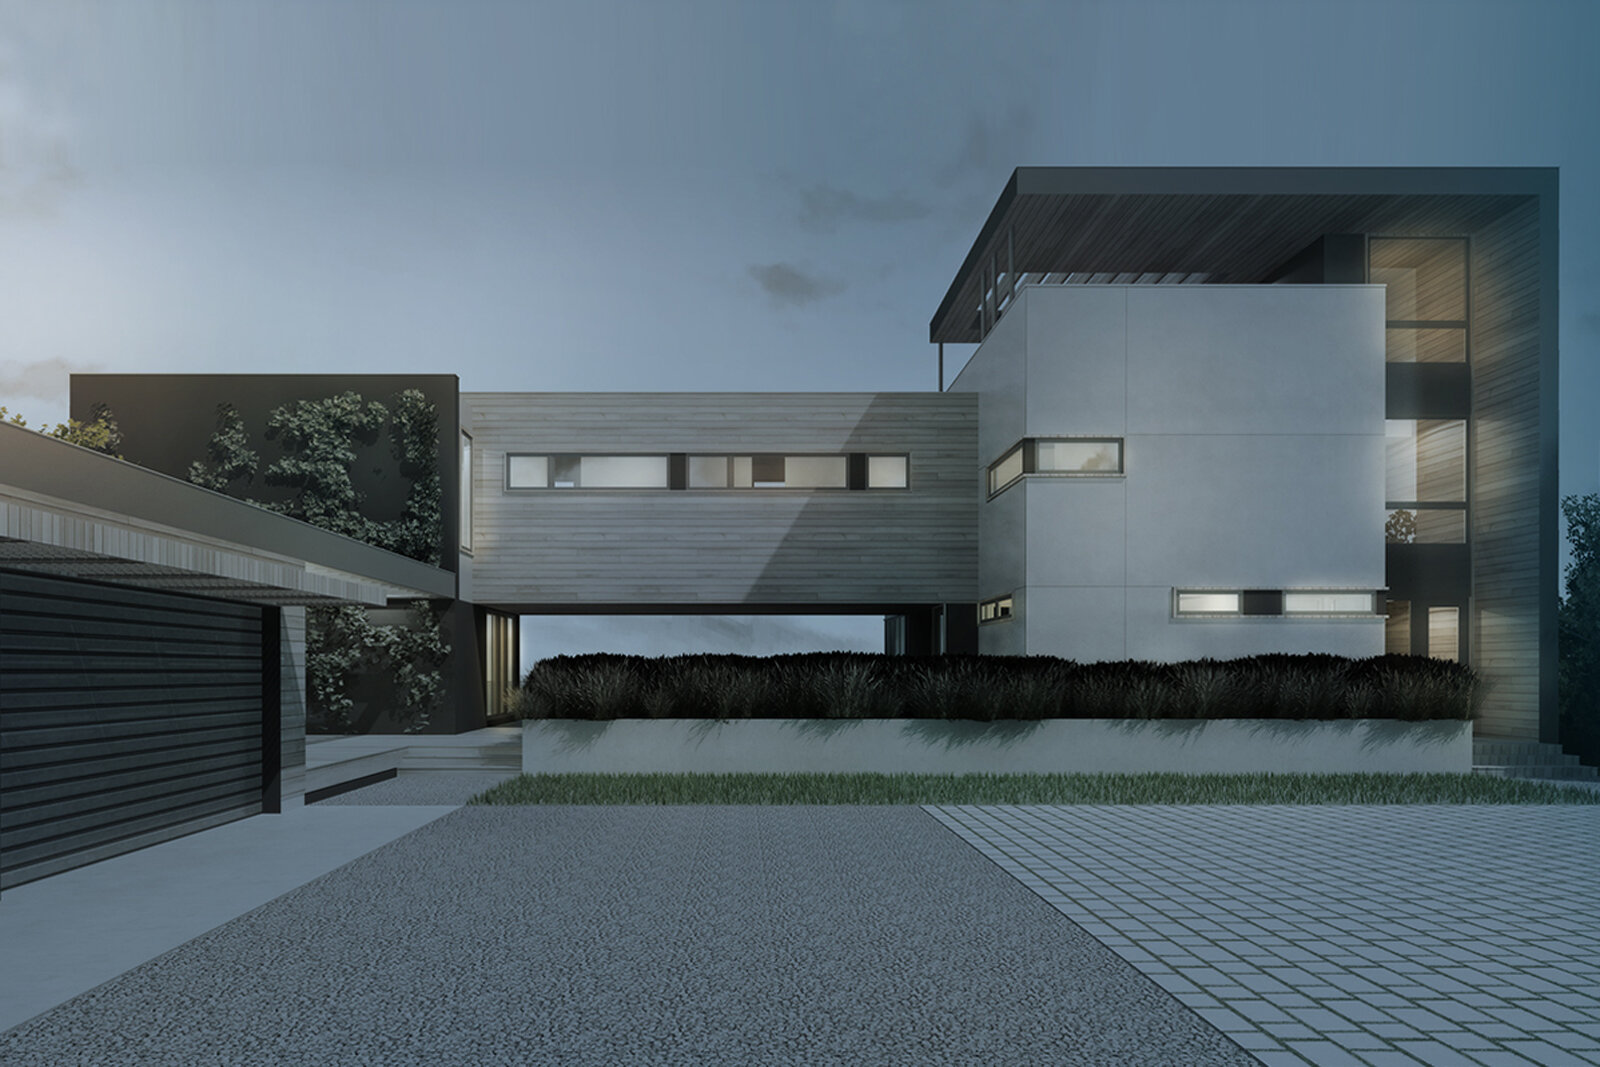 05_res4-resolution-4-architecture-modern-modular-prefab-pelham-bay-house-exterior-facade-rendering.jpg